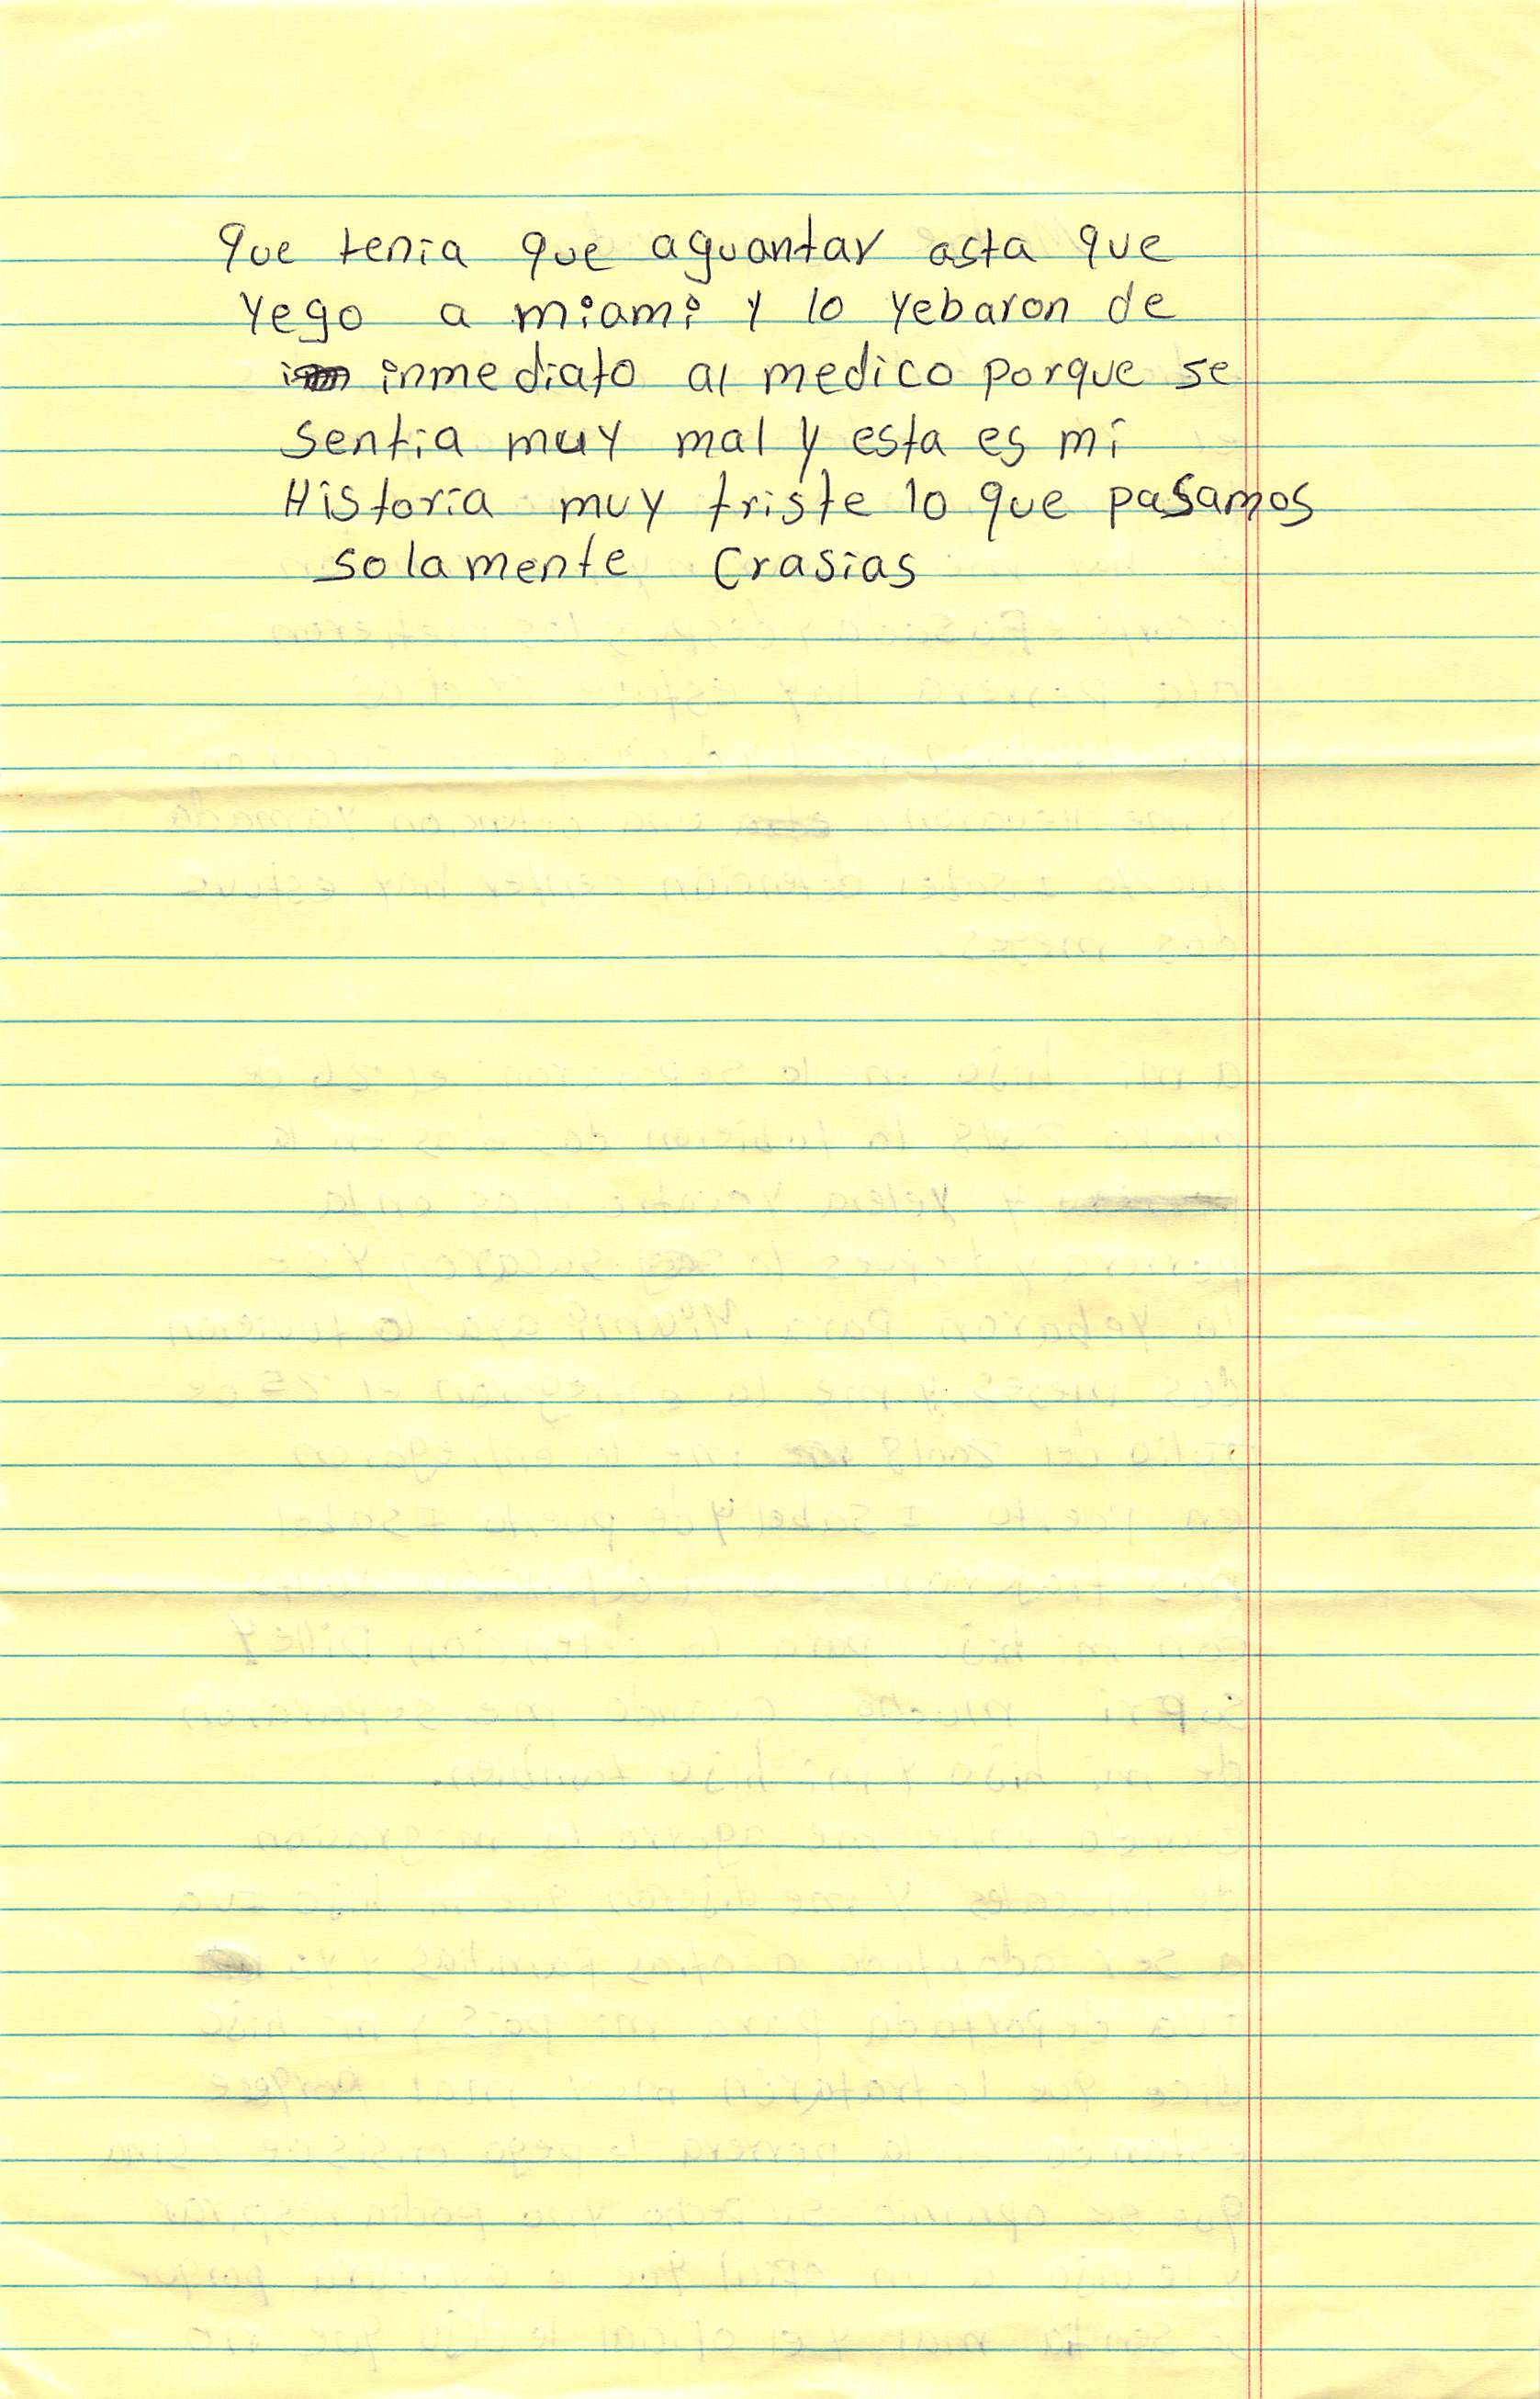 Cristina's Handwritten Letter Part 2